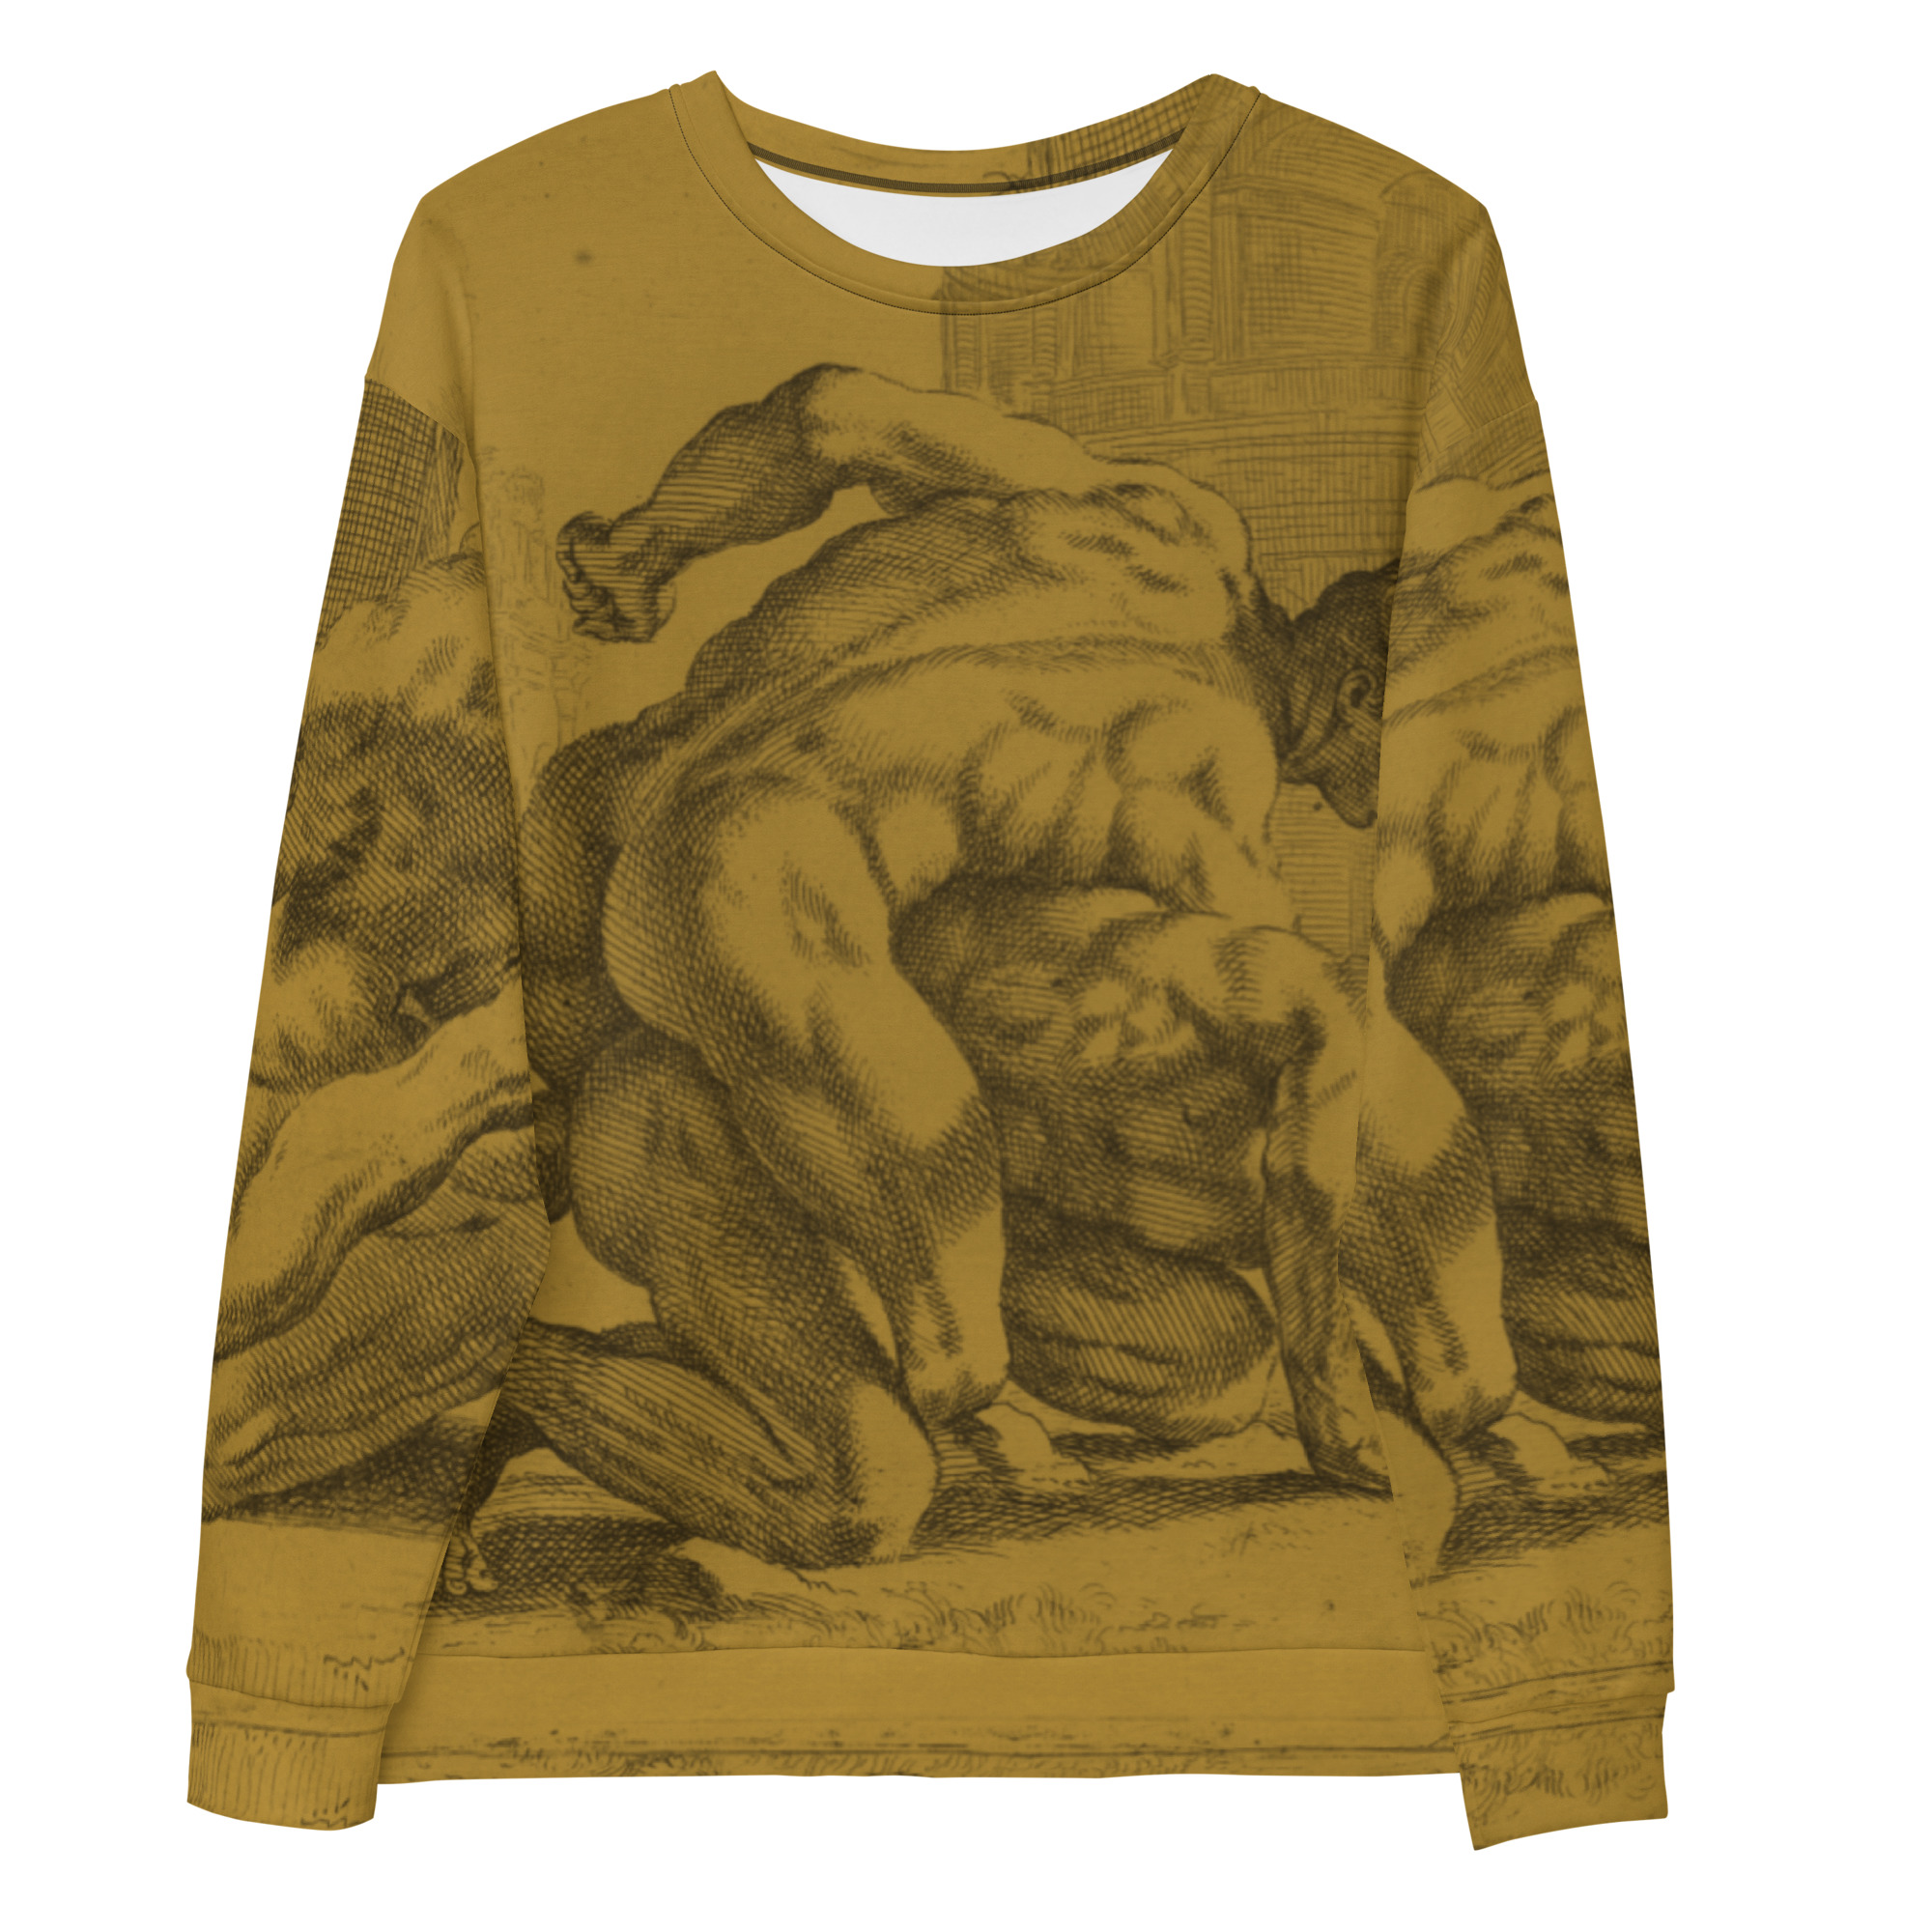 Featured image for “The Medici Wrestlers - Unisex Sweatshirt”